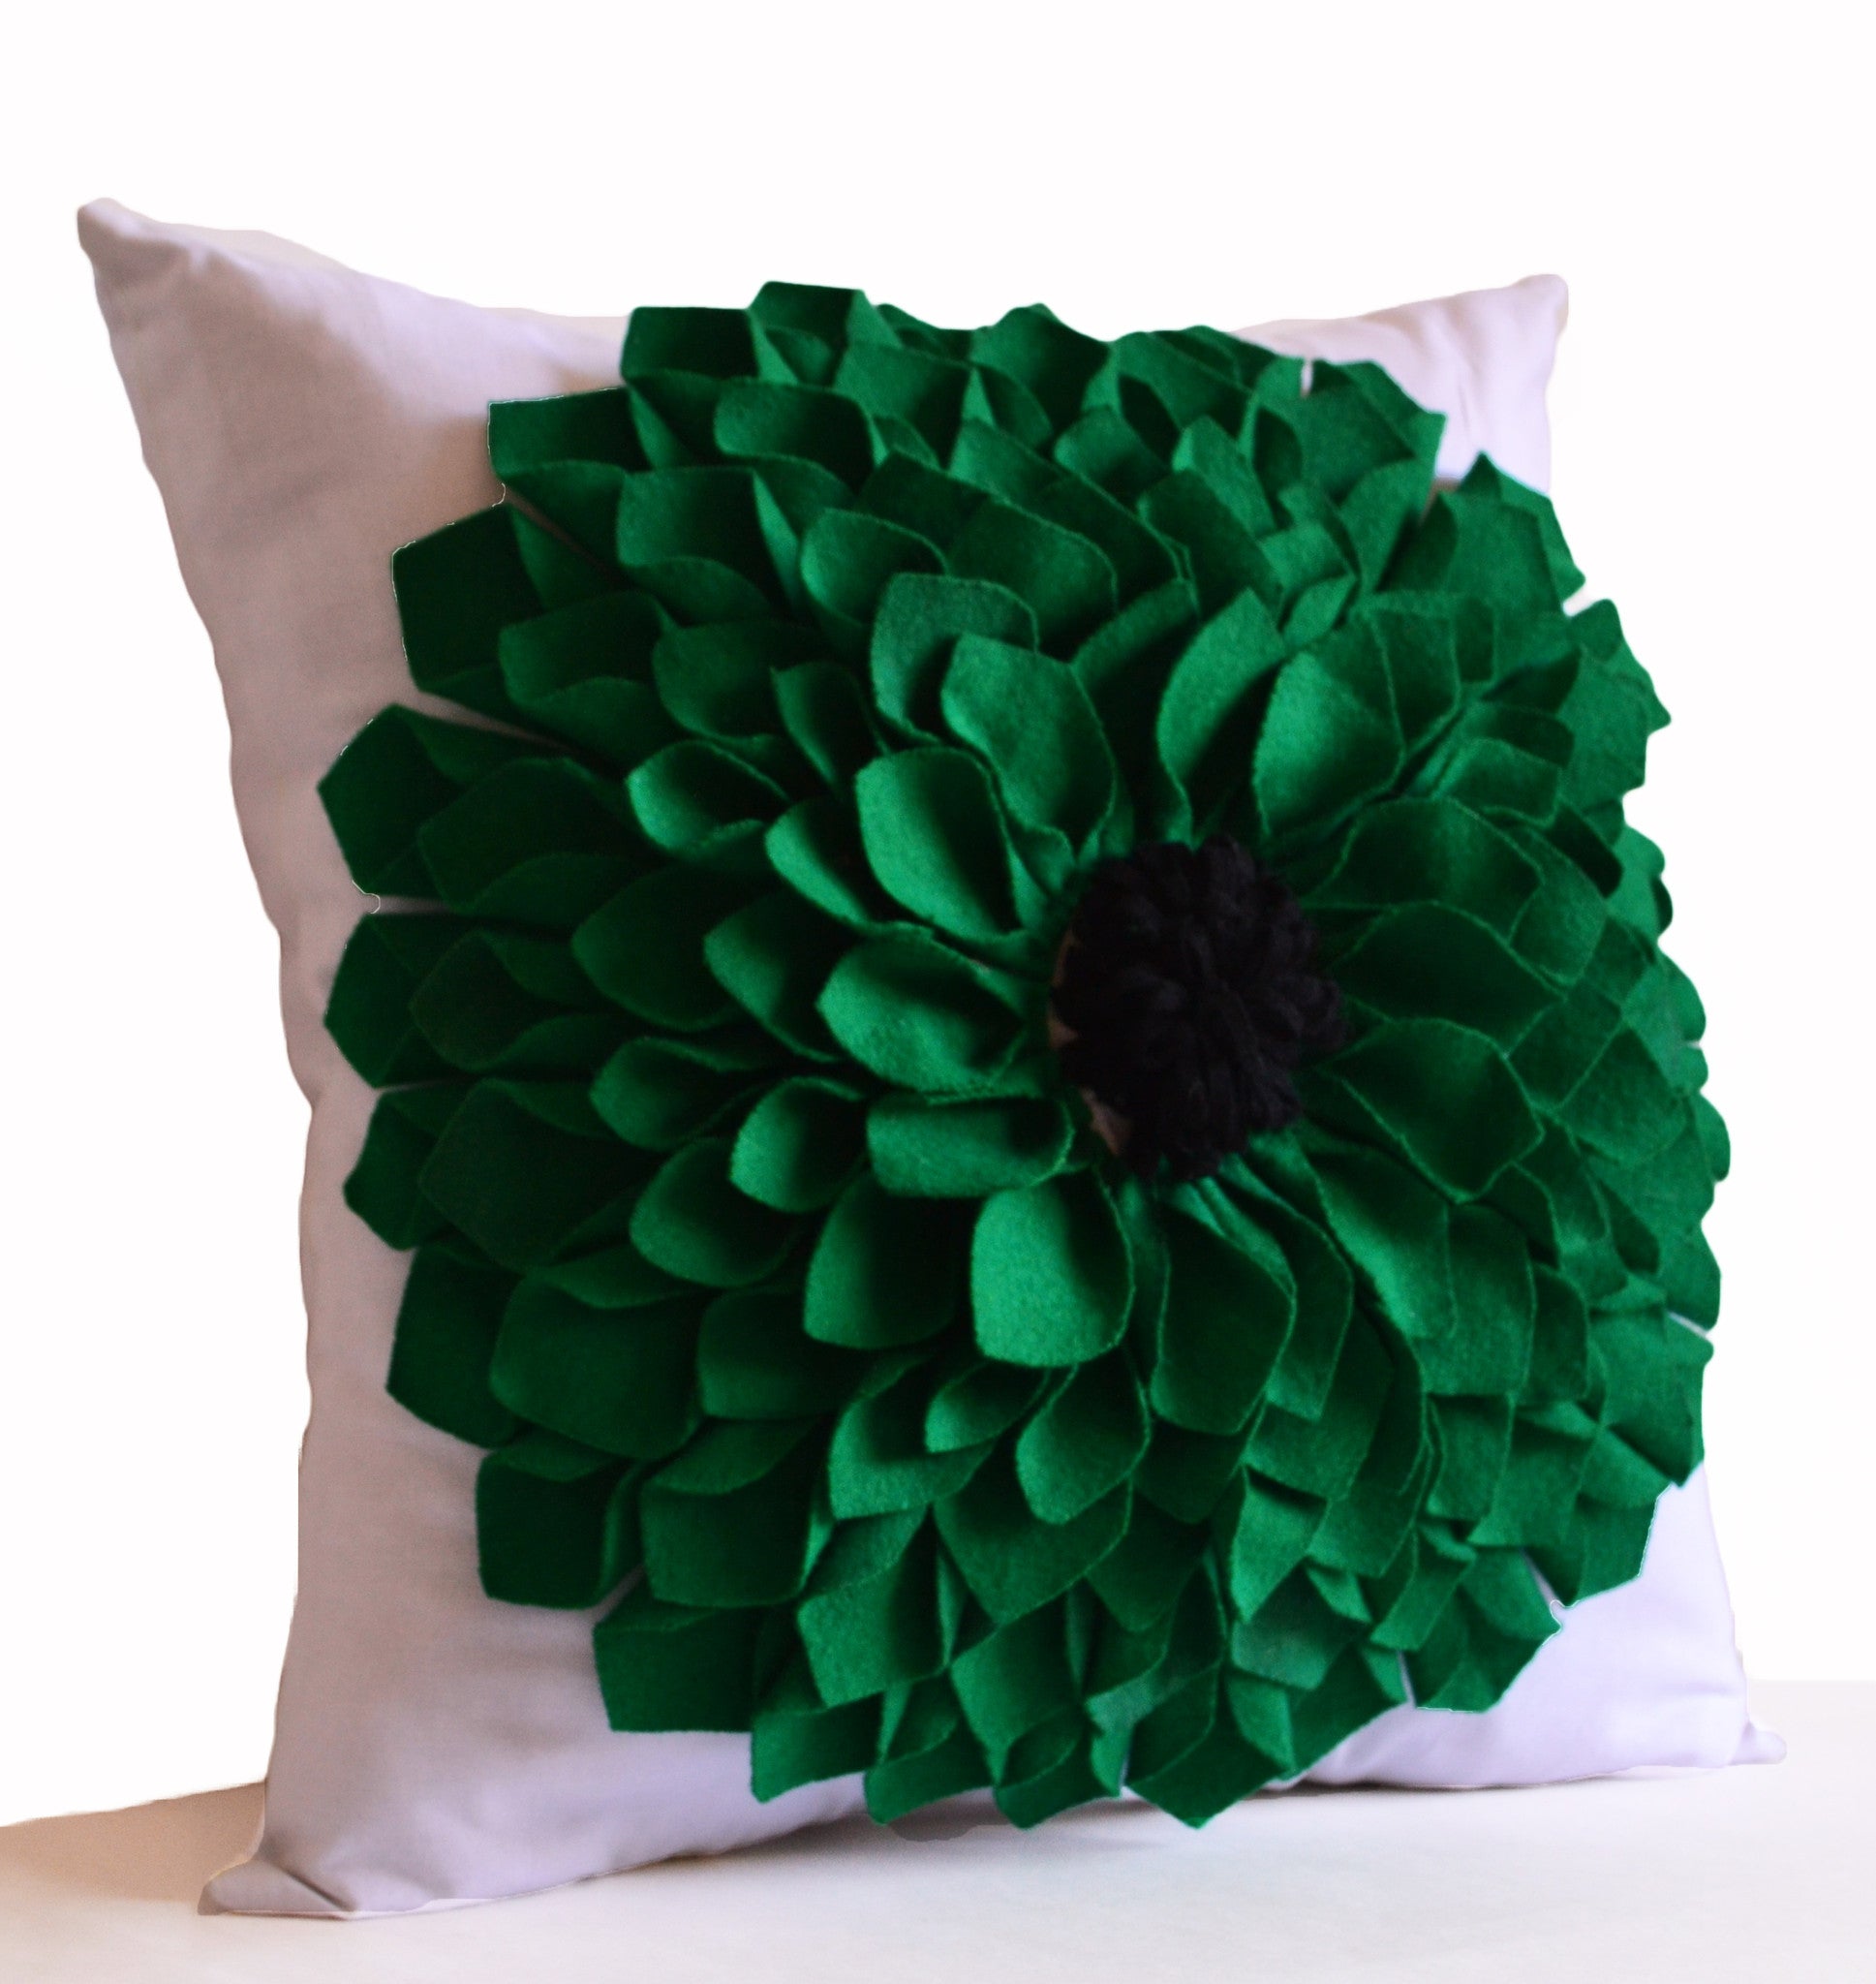 Handmade green felt throw pillow with blossom design